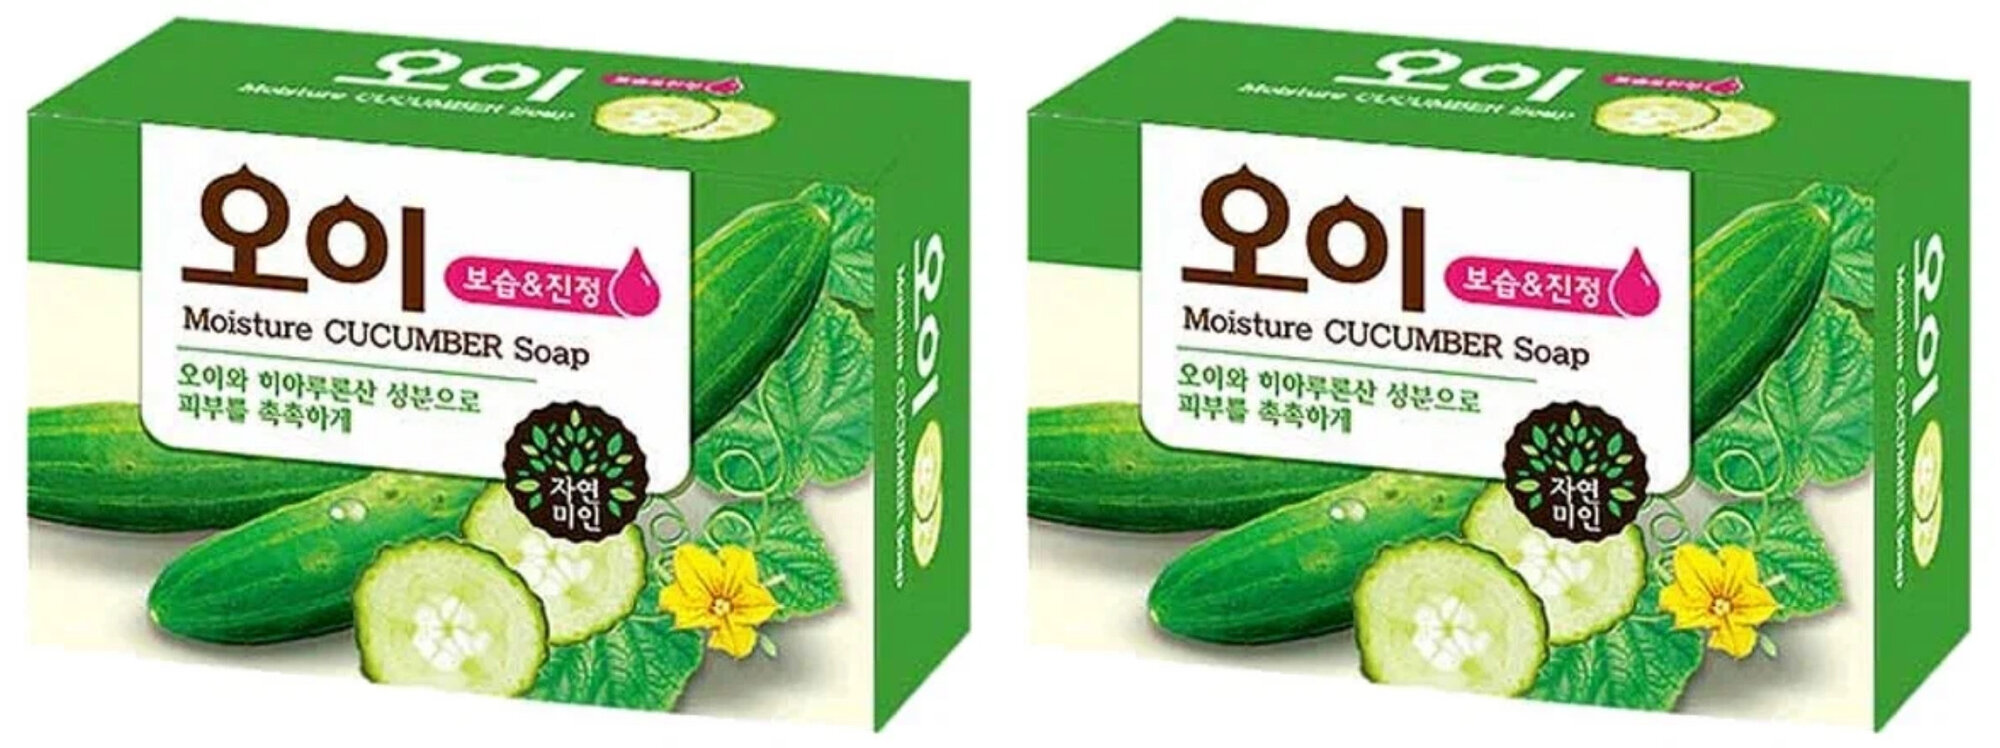 Мыло кусковое Mukunghwa Moisture Cucumber Soap, с экстрактом огурца, 100 гр, 2 шт